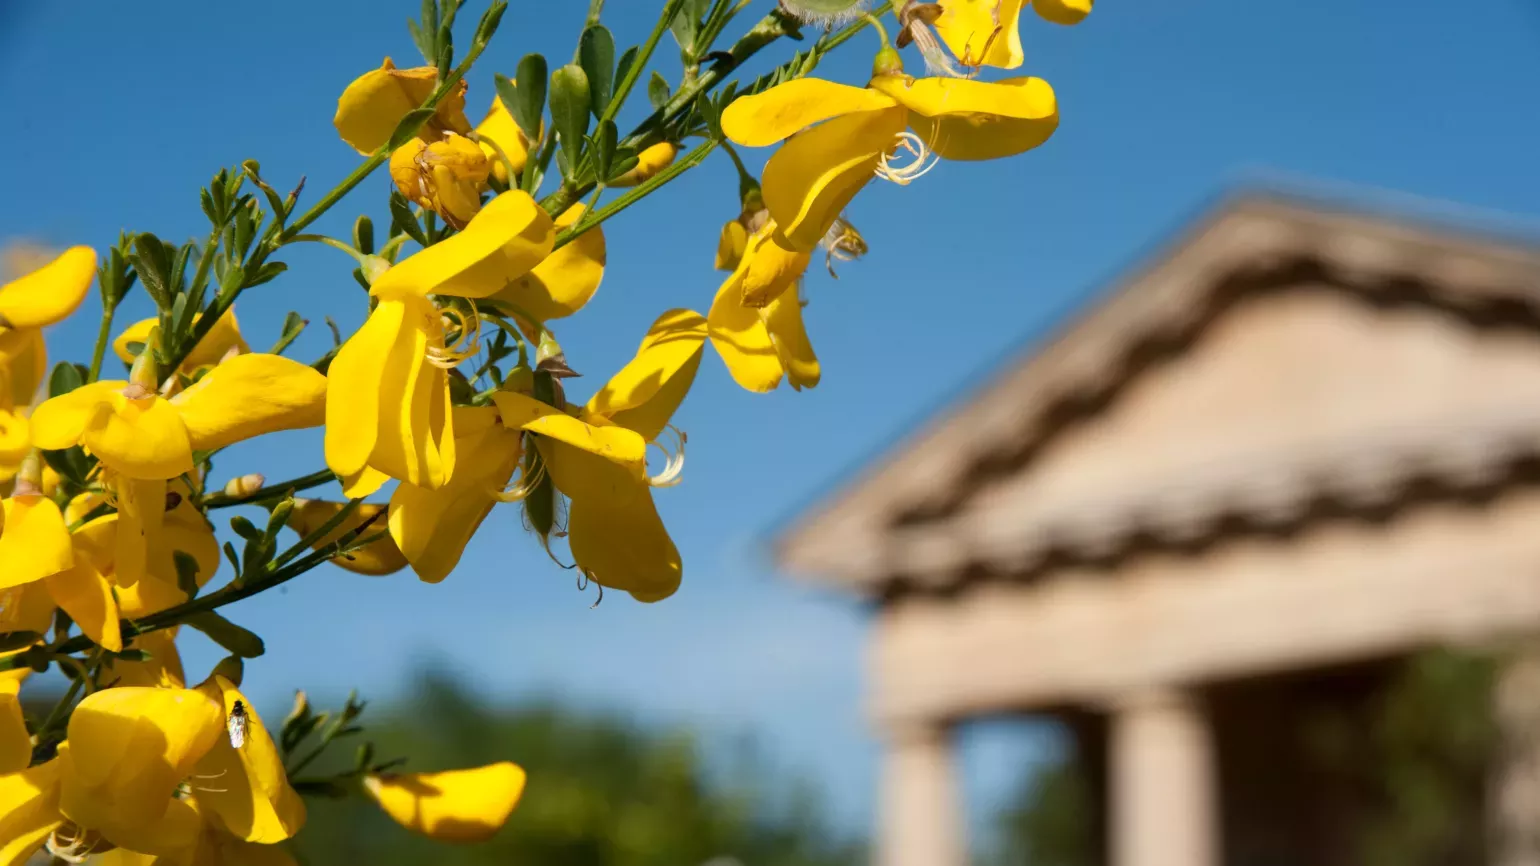 Yellow flowers against a blue sky in the Mediterranean Garden